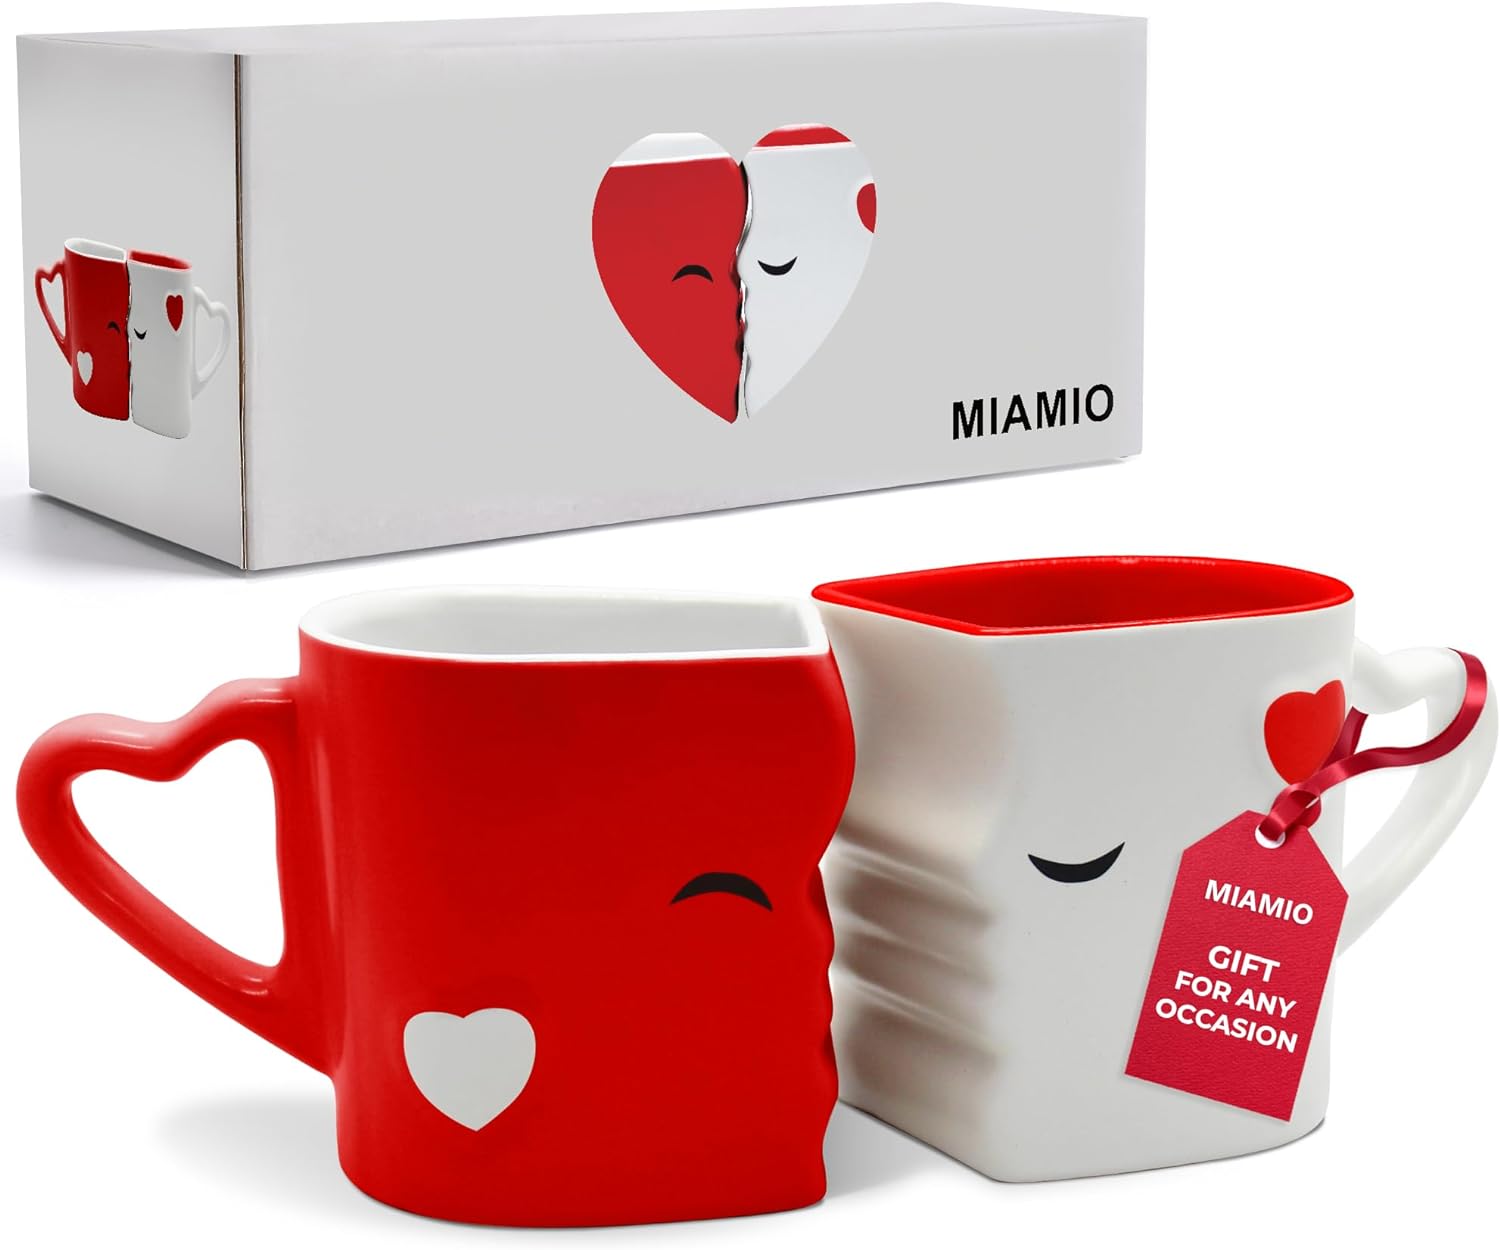 MIAMIO - Coffee Mugs/Kissing Mugs Bridal Pair Gift Set for Weddings/Birthday/Anniversary with Gift Box (Red) 2